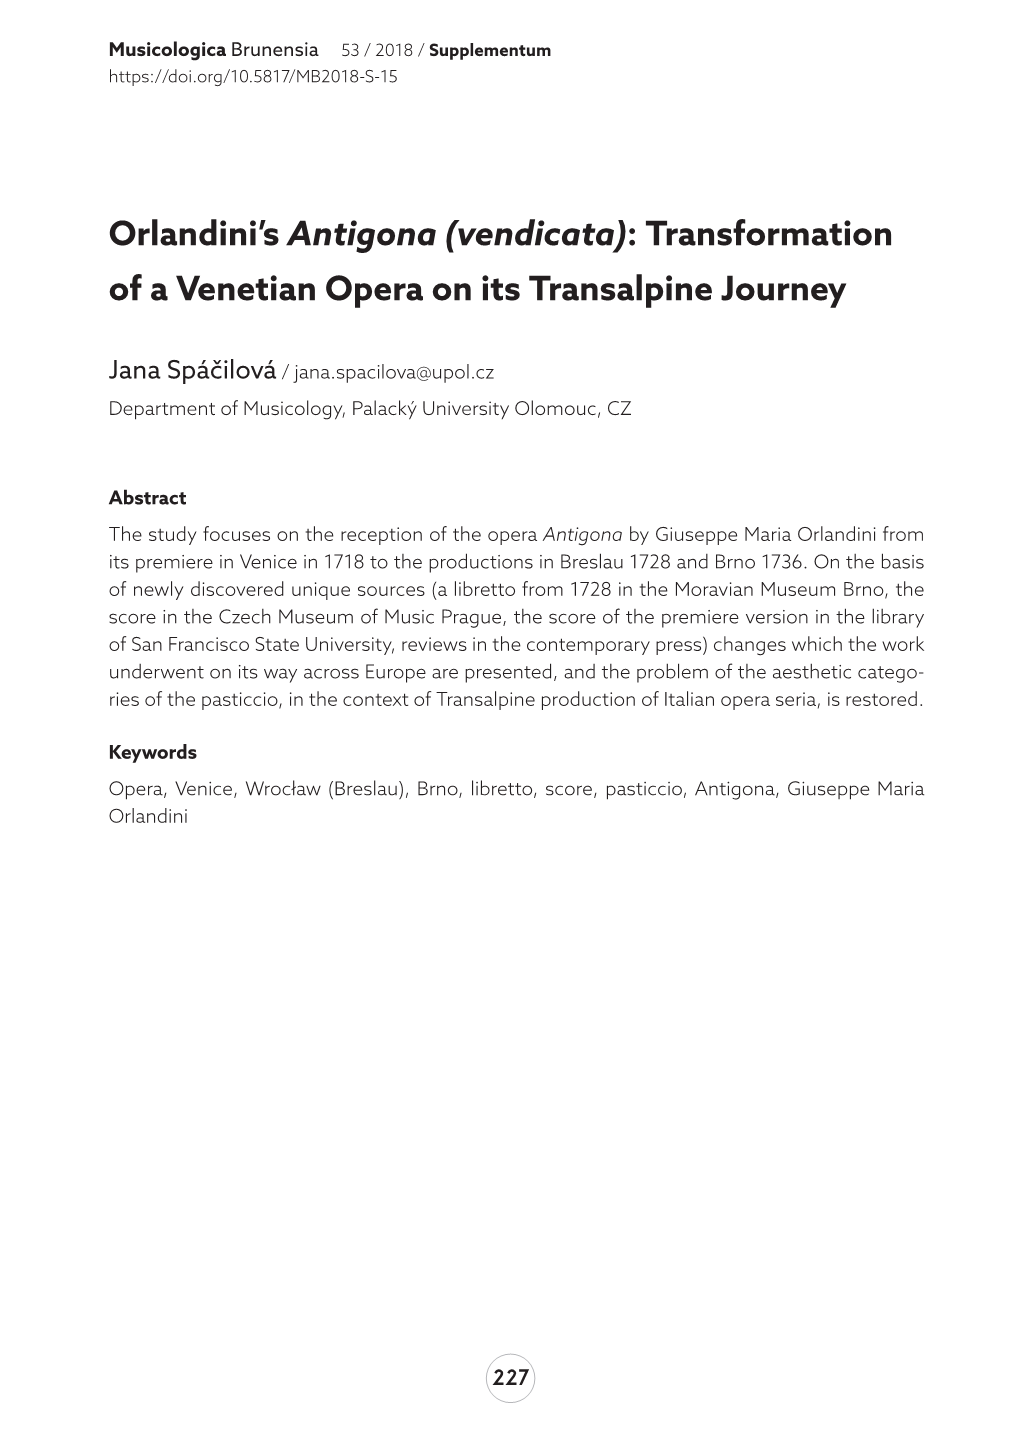 Orlandini's Antigona (Vendicata): Transformation of a Venetian Opera